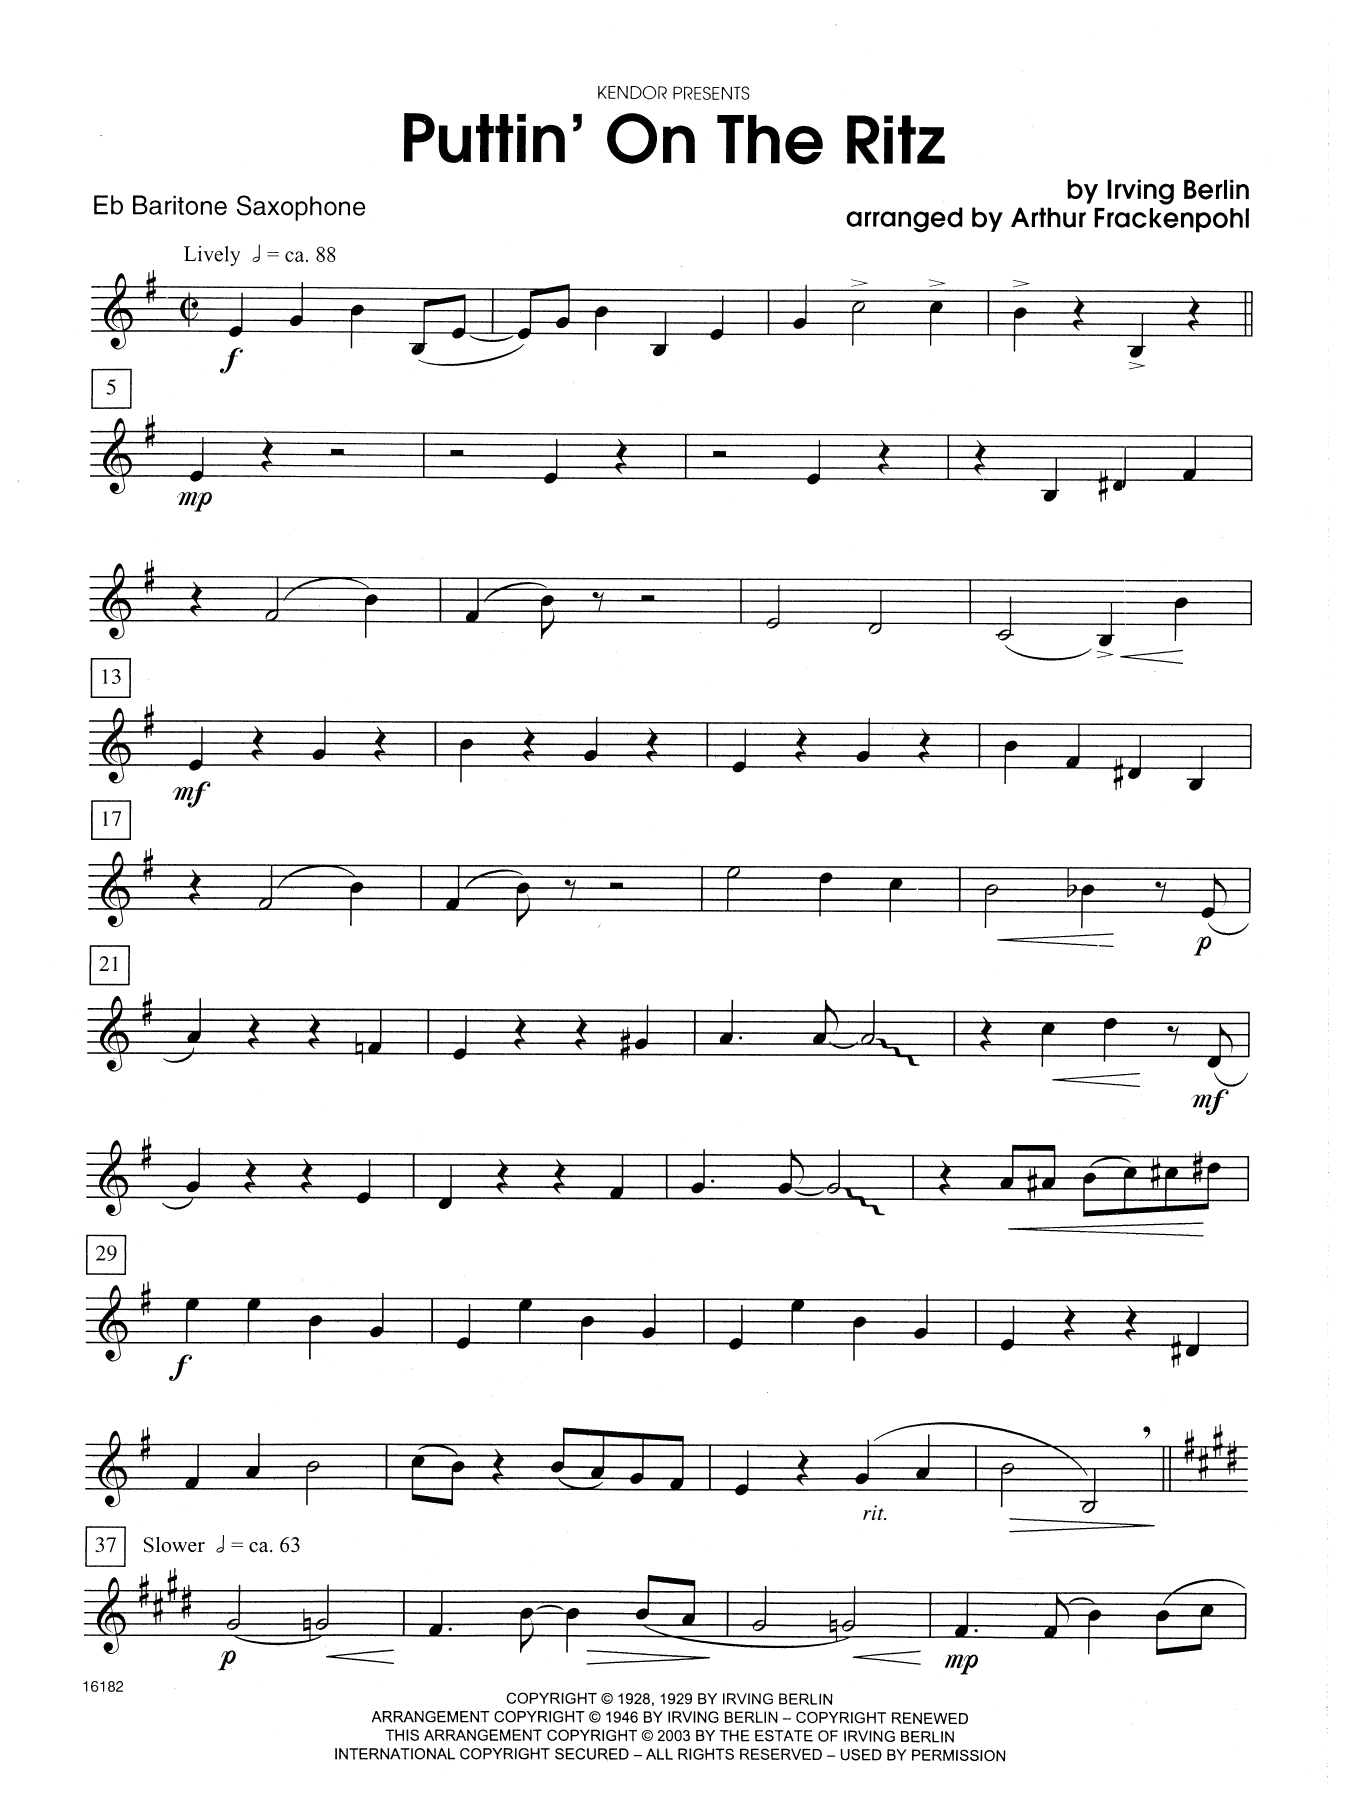 Arthur Frackenpohl Puttin' on the Ritz - Eb Baritone Saxophone sheet music notes and chords. Download Printable PDF.